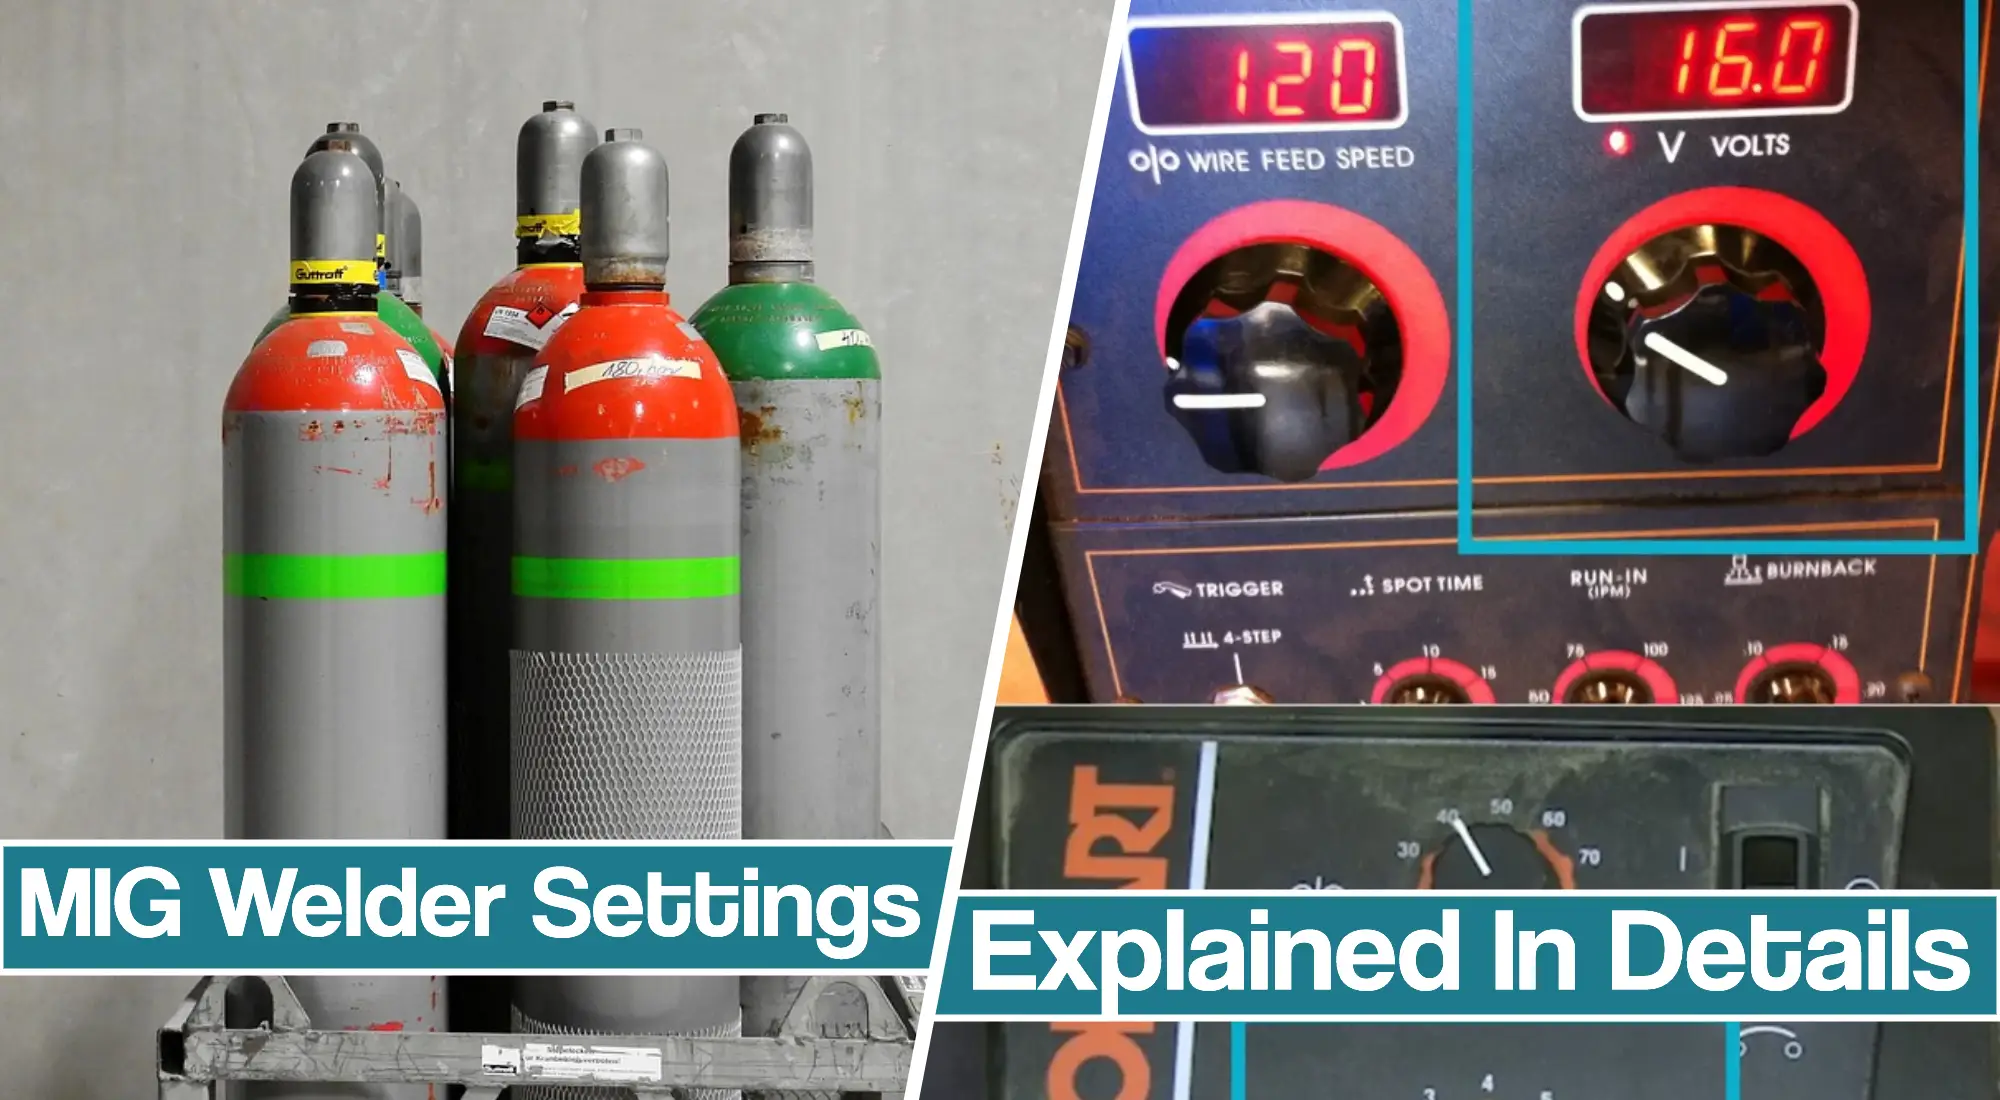 MIG welder settings explained – Amperage & Wire Speed